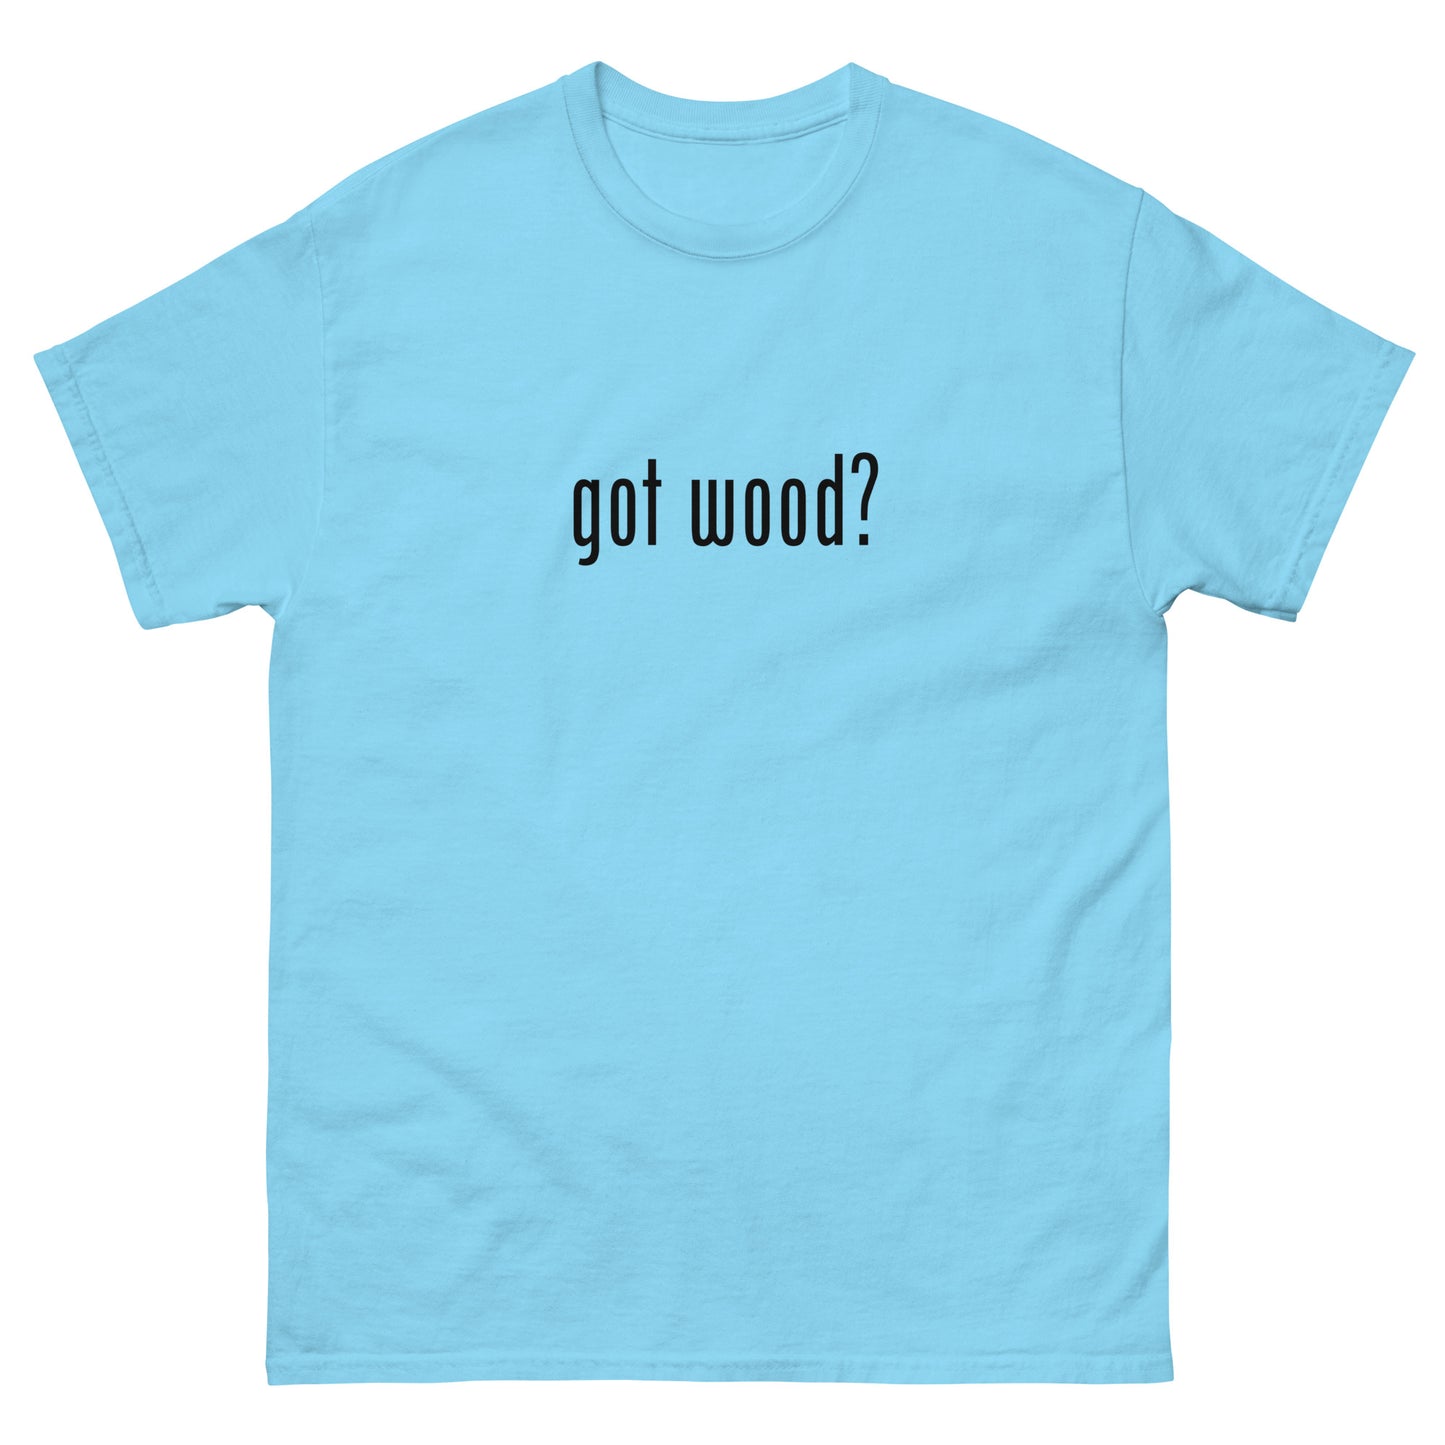 “got wood?” Woodworking T-Shirt – Black Ink (Multiple Colors)